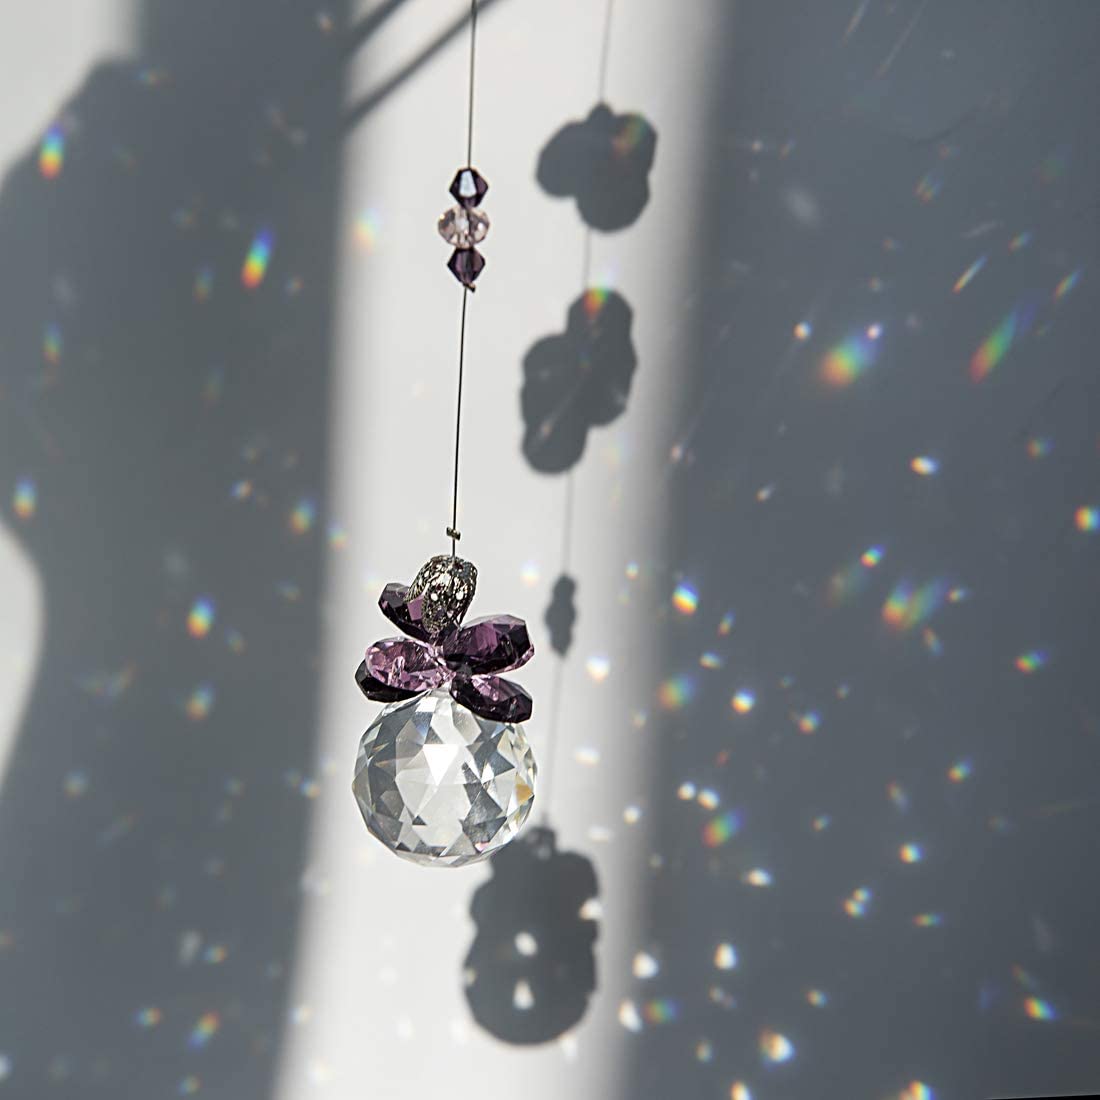 30 mm Crystal Hanging Suncatcher Ball Prism Home Wedding Decoration Hand Crafts